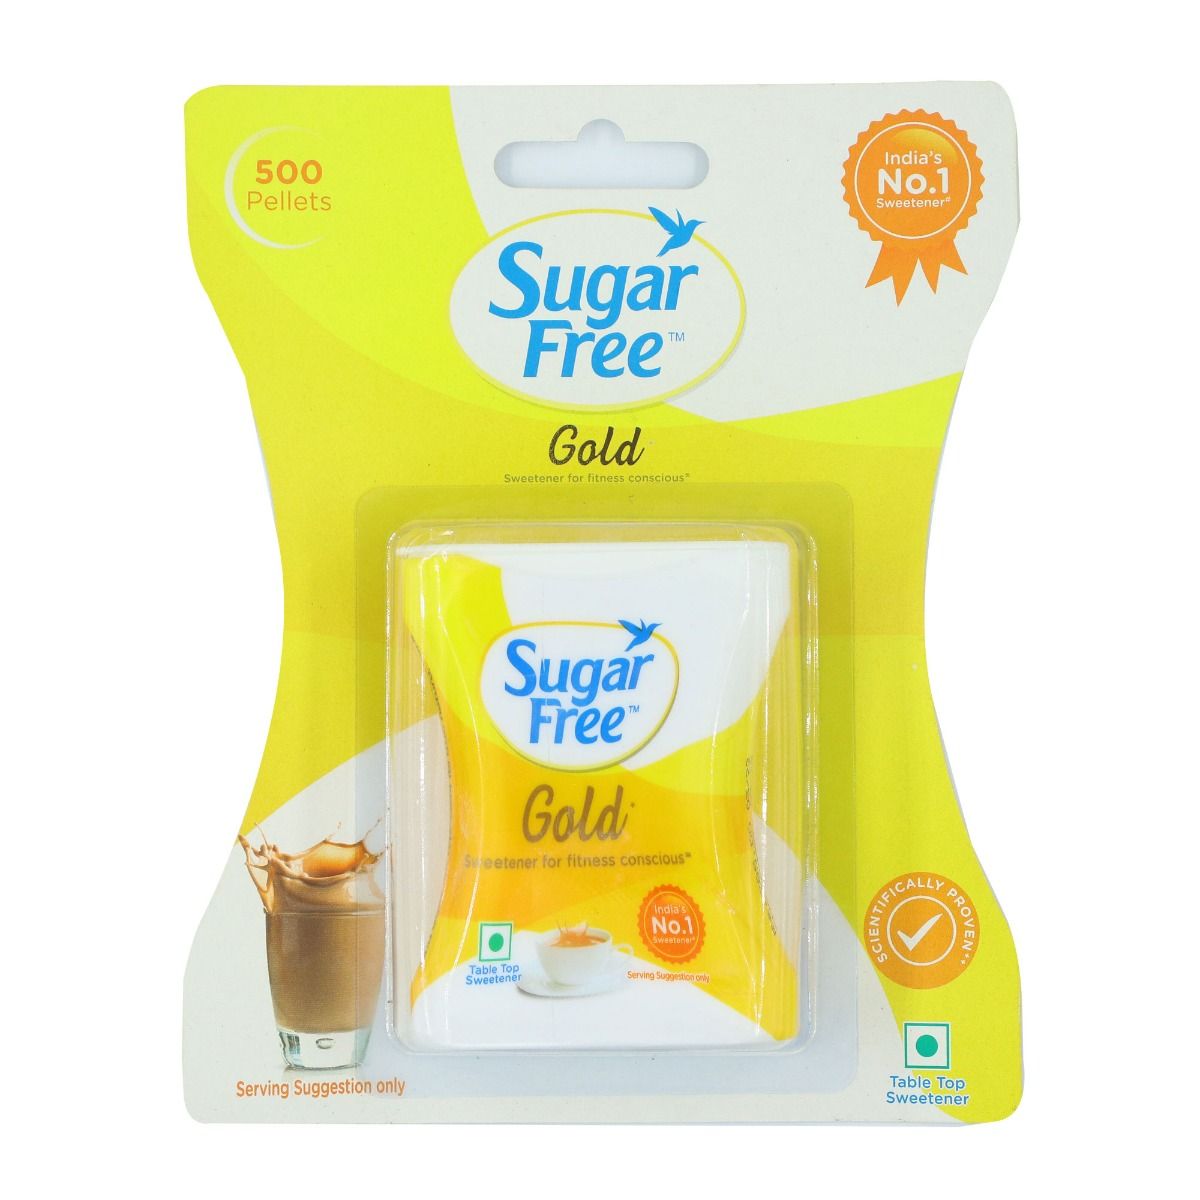 Sugar Free Gold Low Calorie Sweetener, 500 Pellets, Pack of 1 